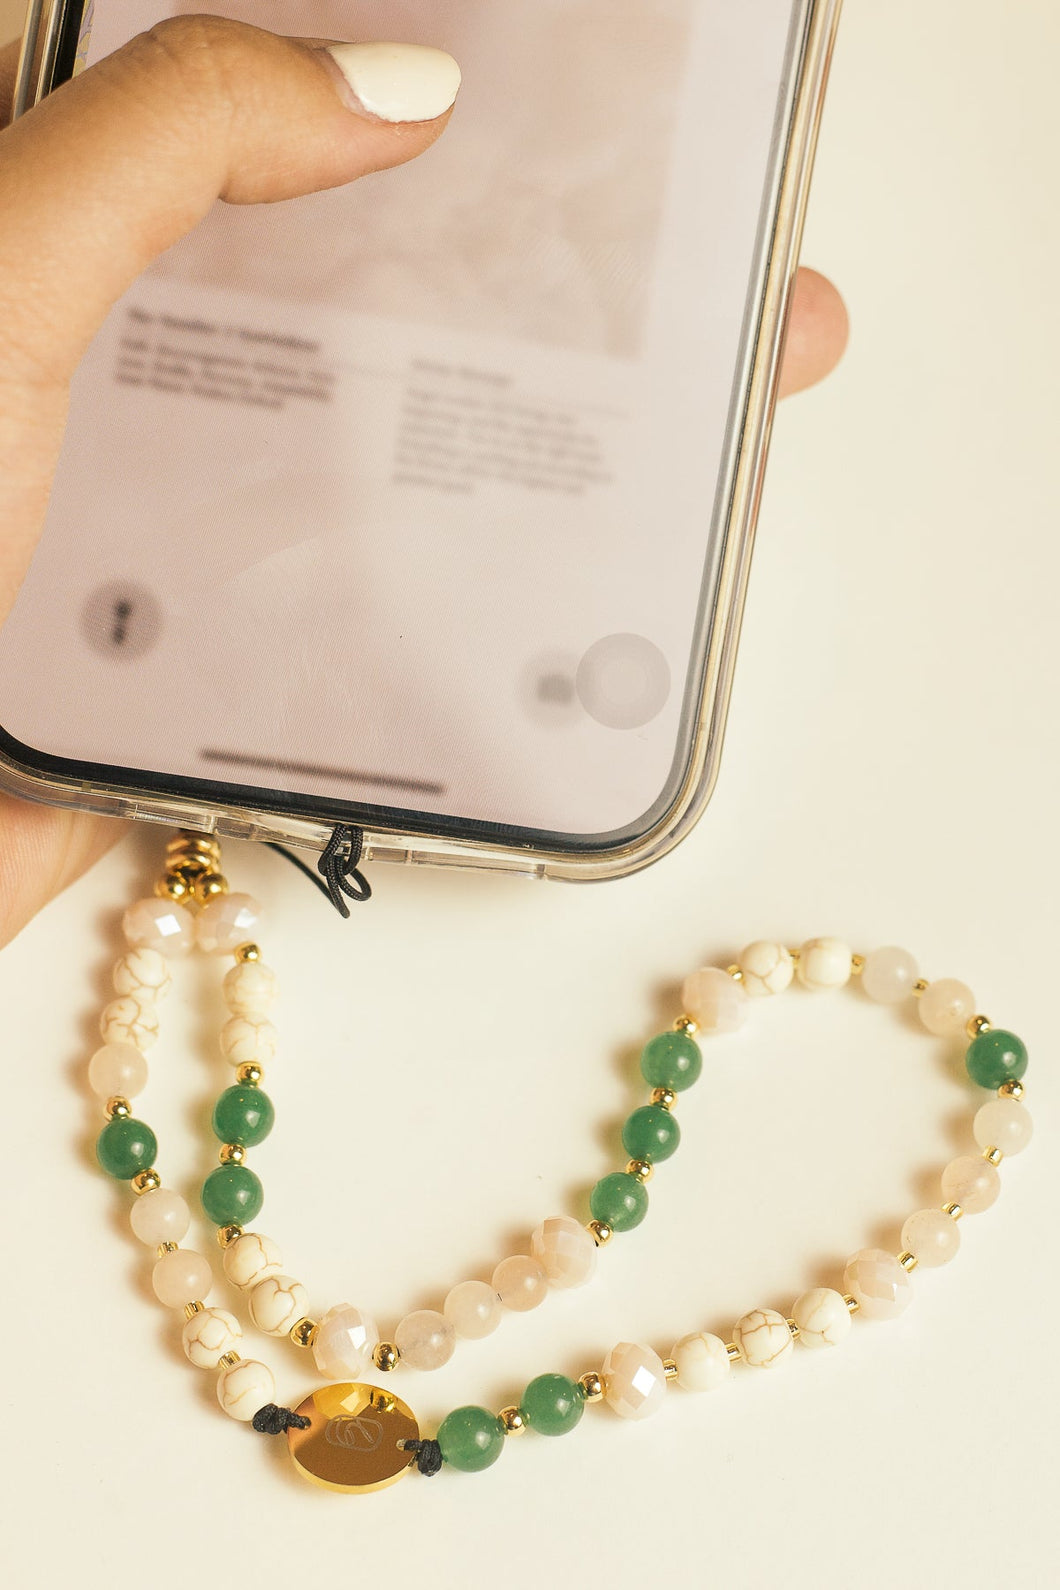 Helly jade phone & bag charm
